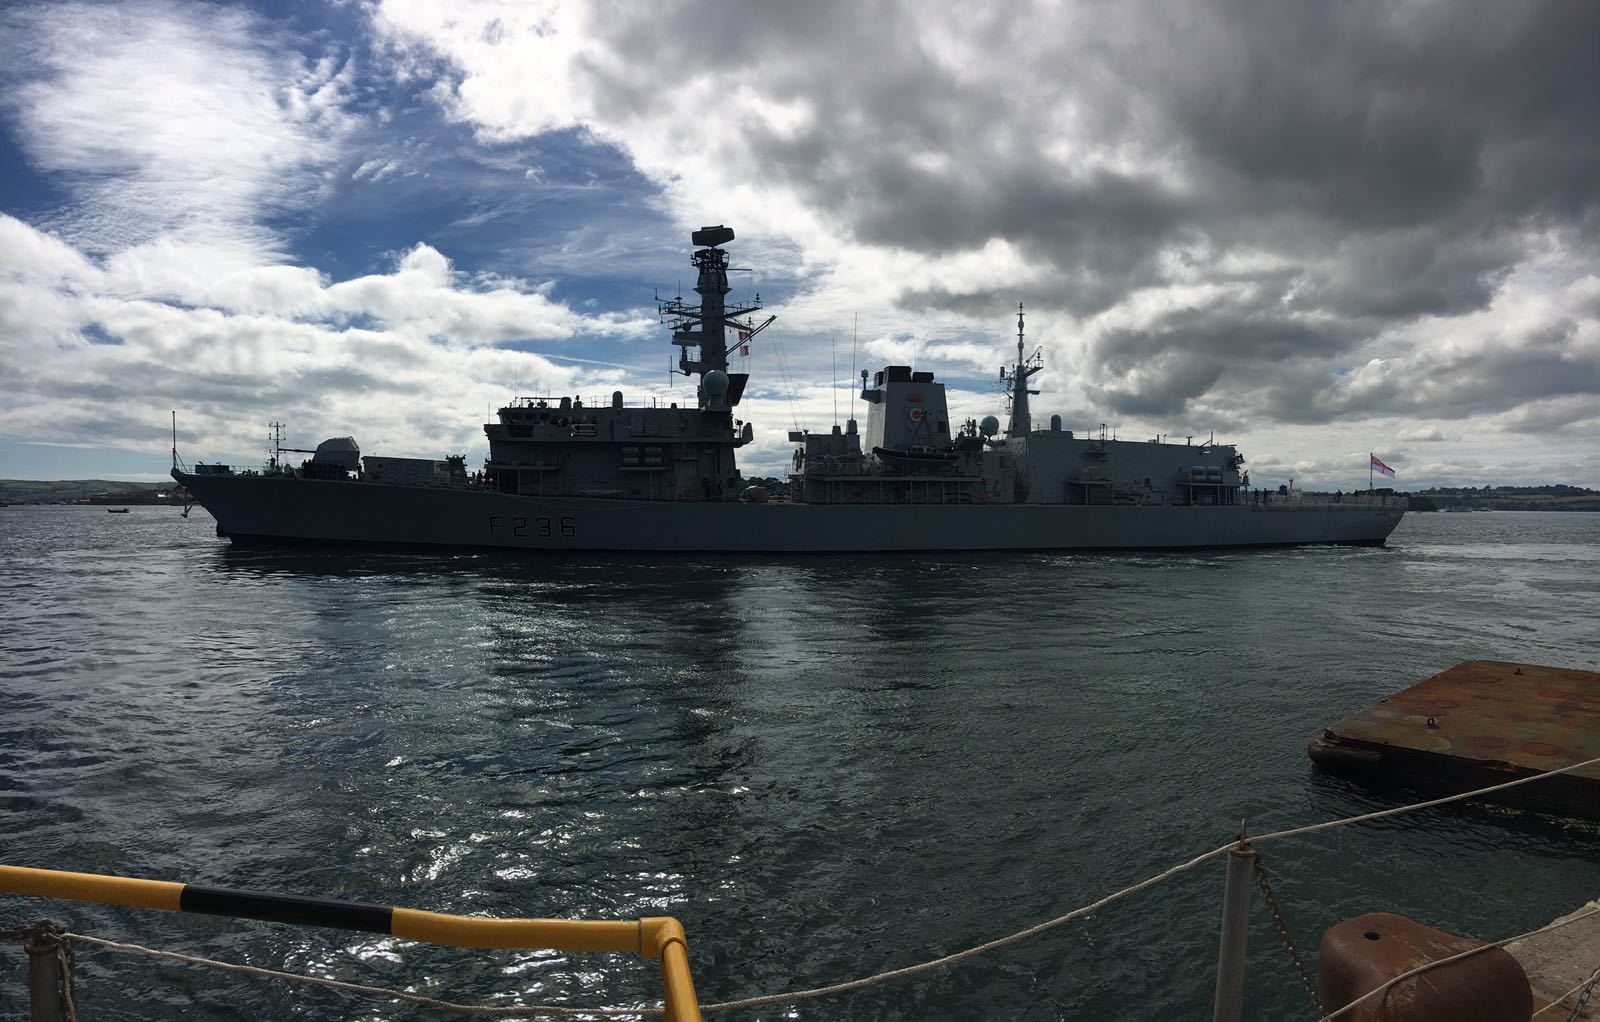 HMS MONTROSE leaving harbour for sea trials